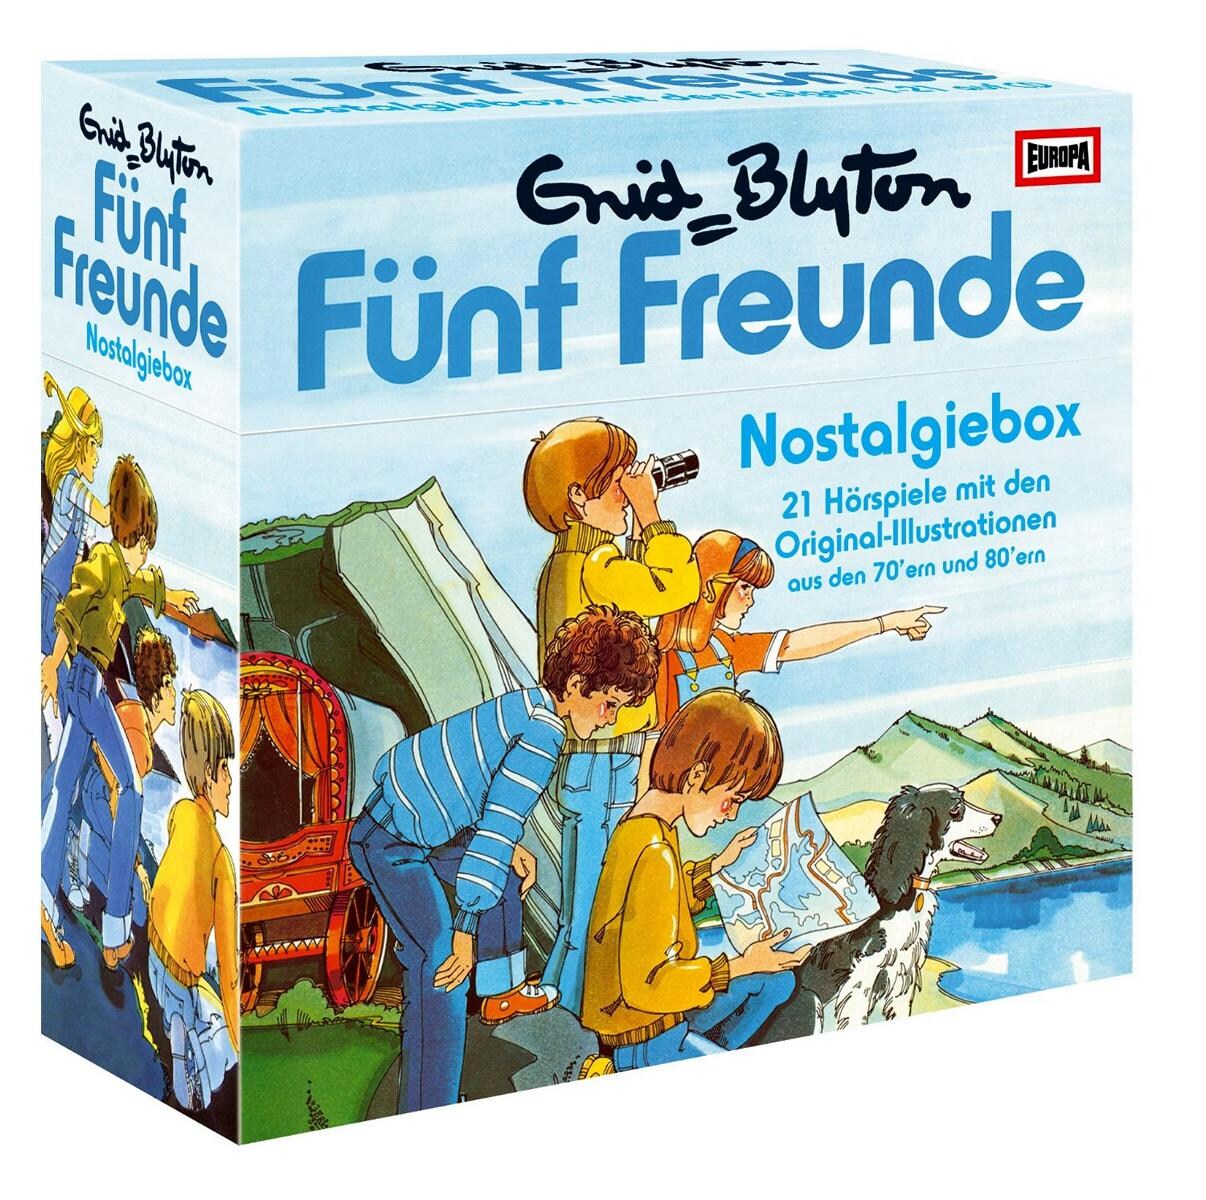 Europa (Sony Music) CD-Box Fuenf Freunde Nostalgie-Box F.1-21